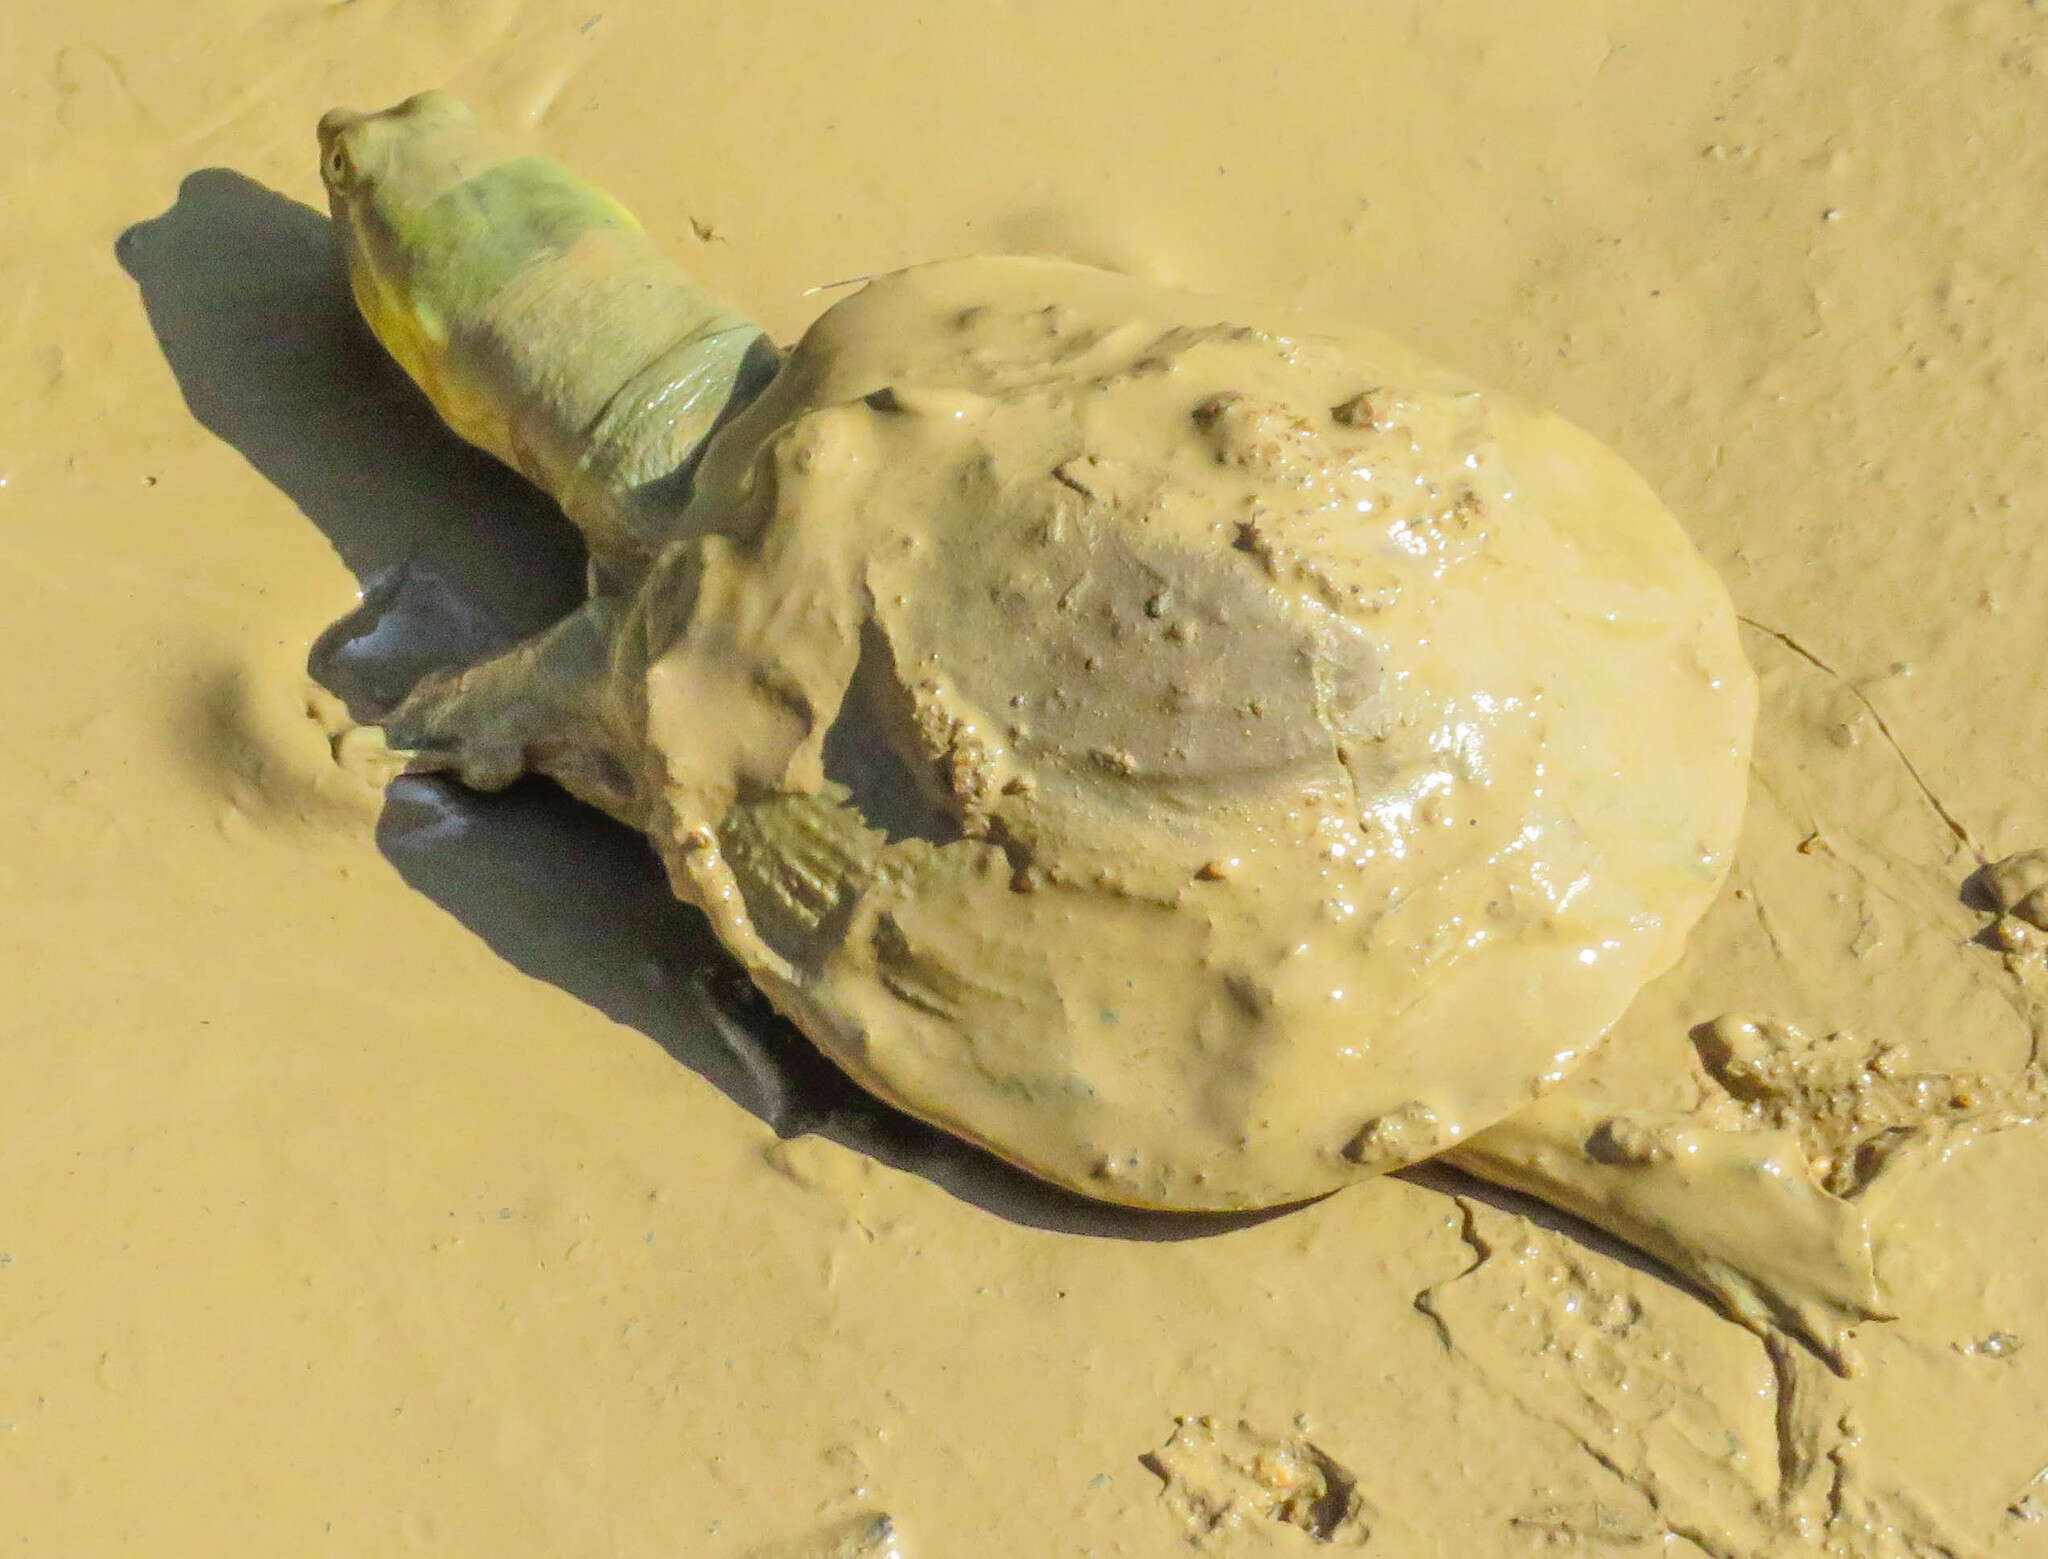 Image of Sri Lankan flapshell turtle